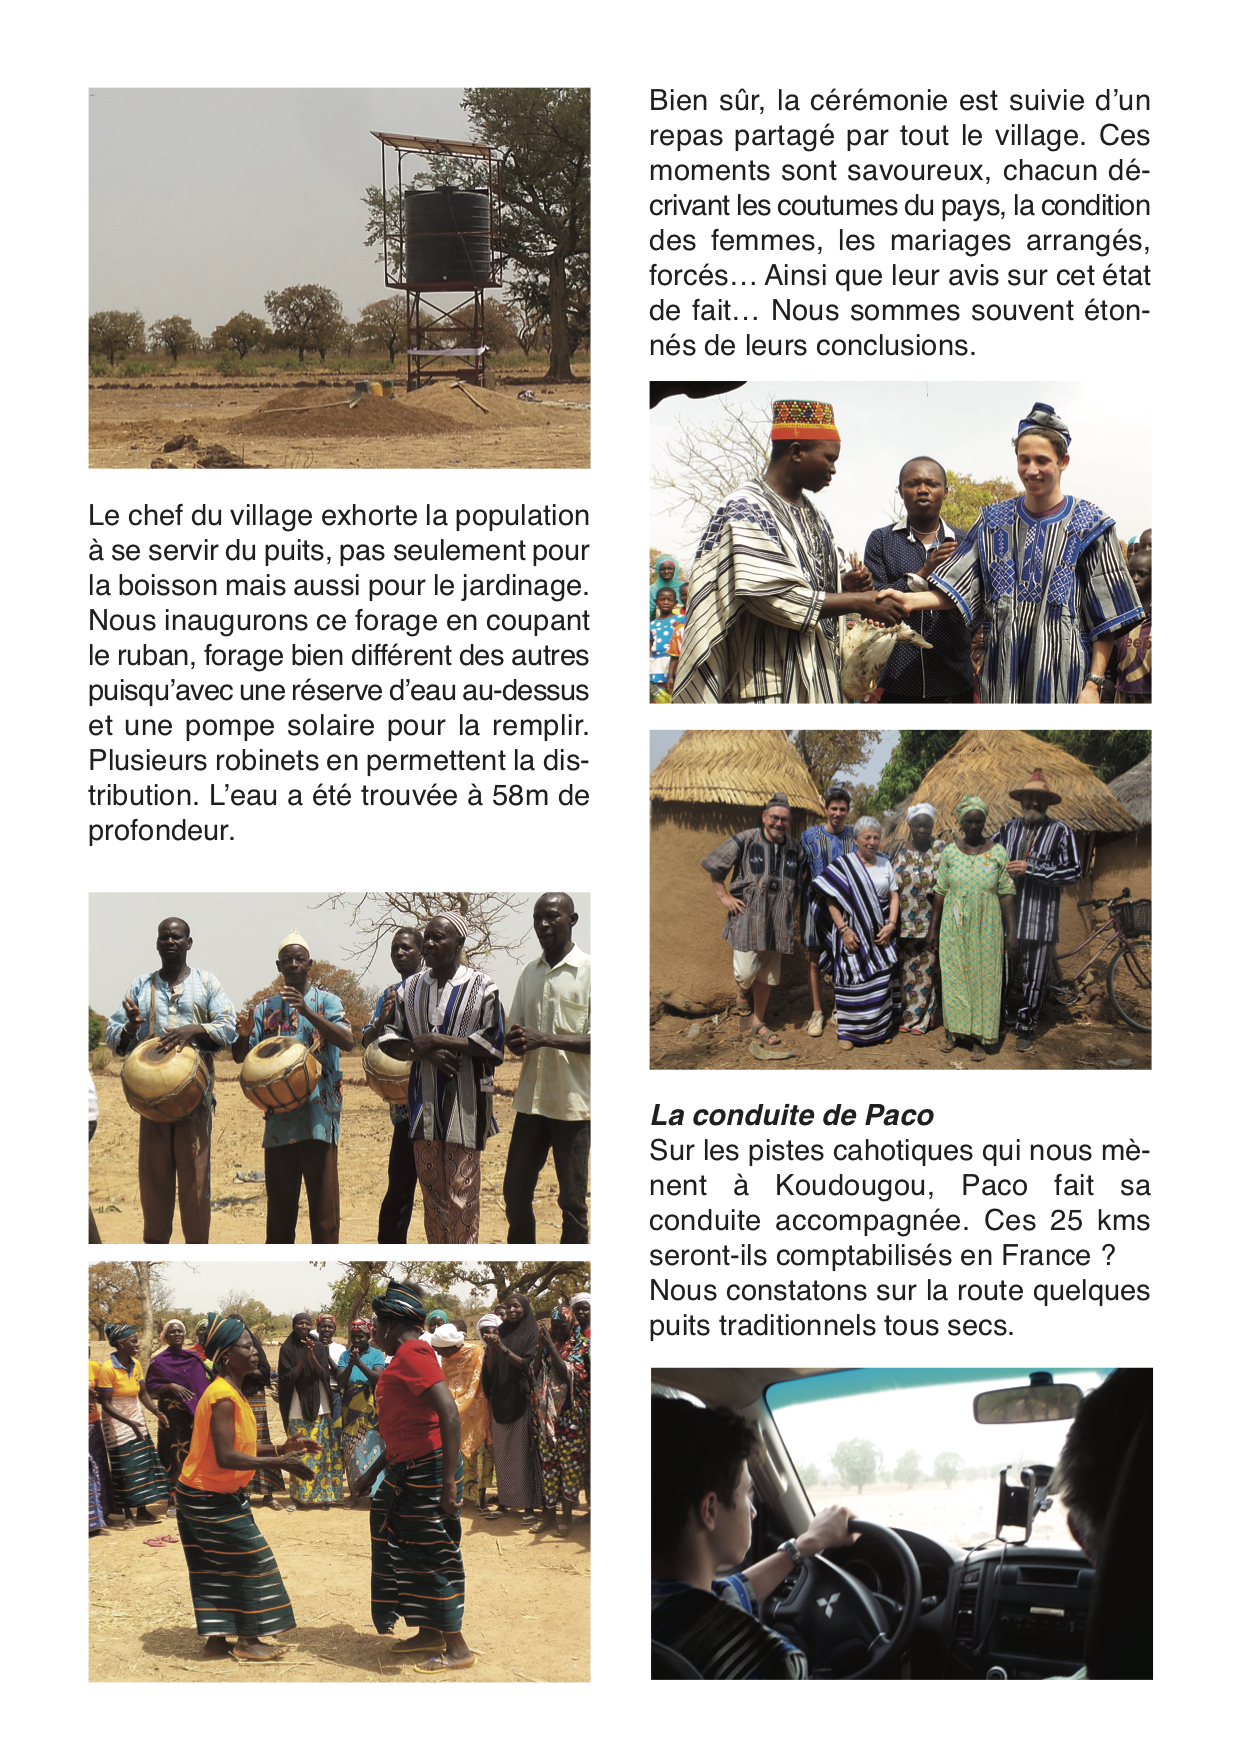 Journal de voyage au Burkina Faso - Dimanche 6 au lundi 7 mars 2022 - page 2